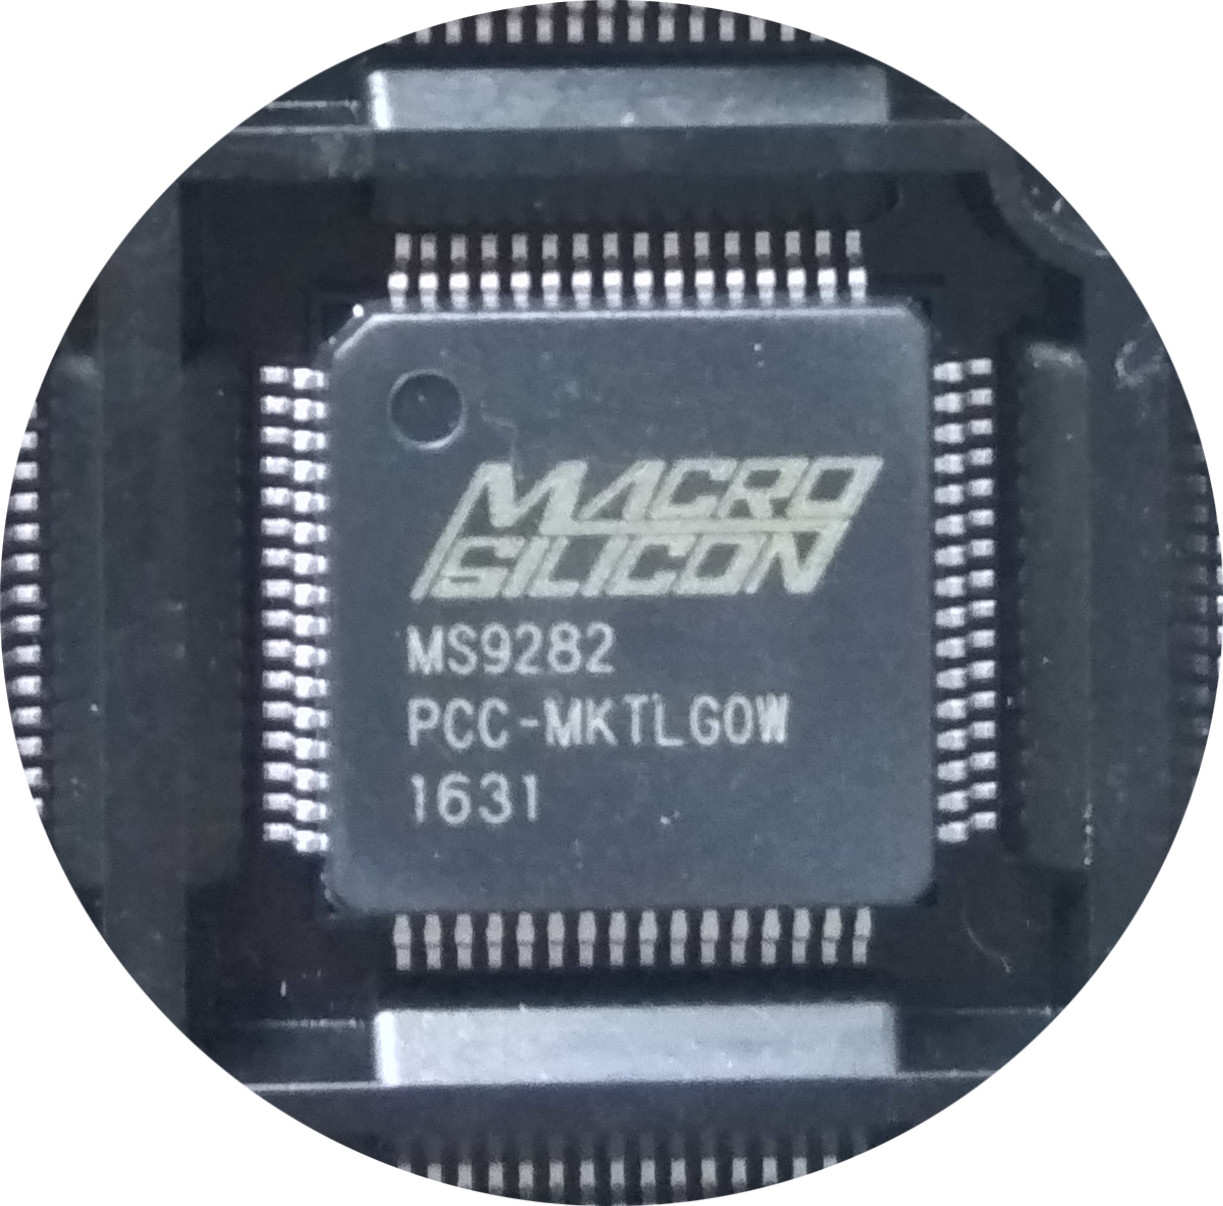 VGA转HDMI 方案 MS9282单芯片 支持1920*1200分辨率